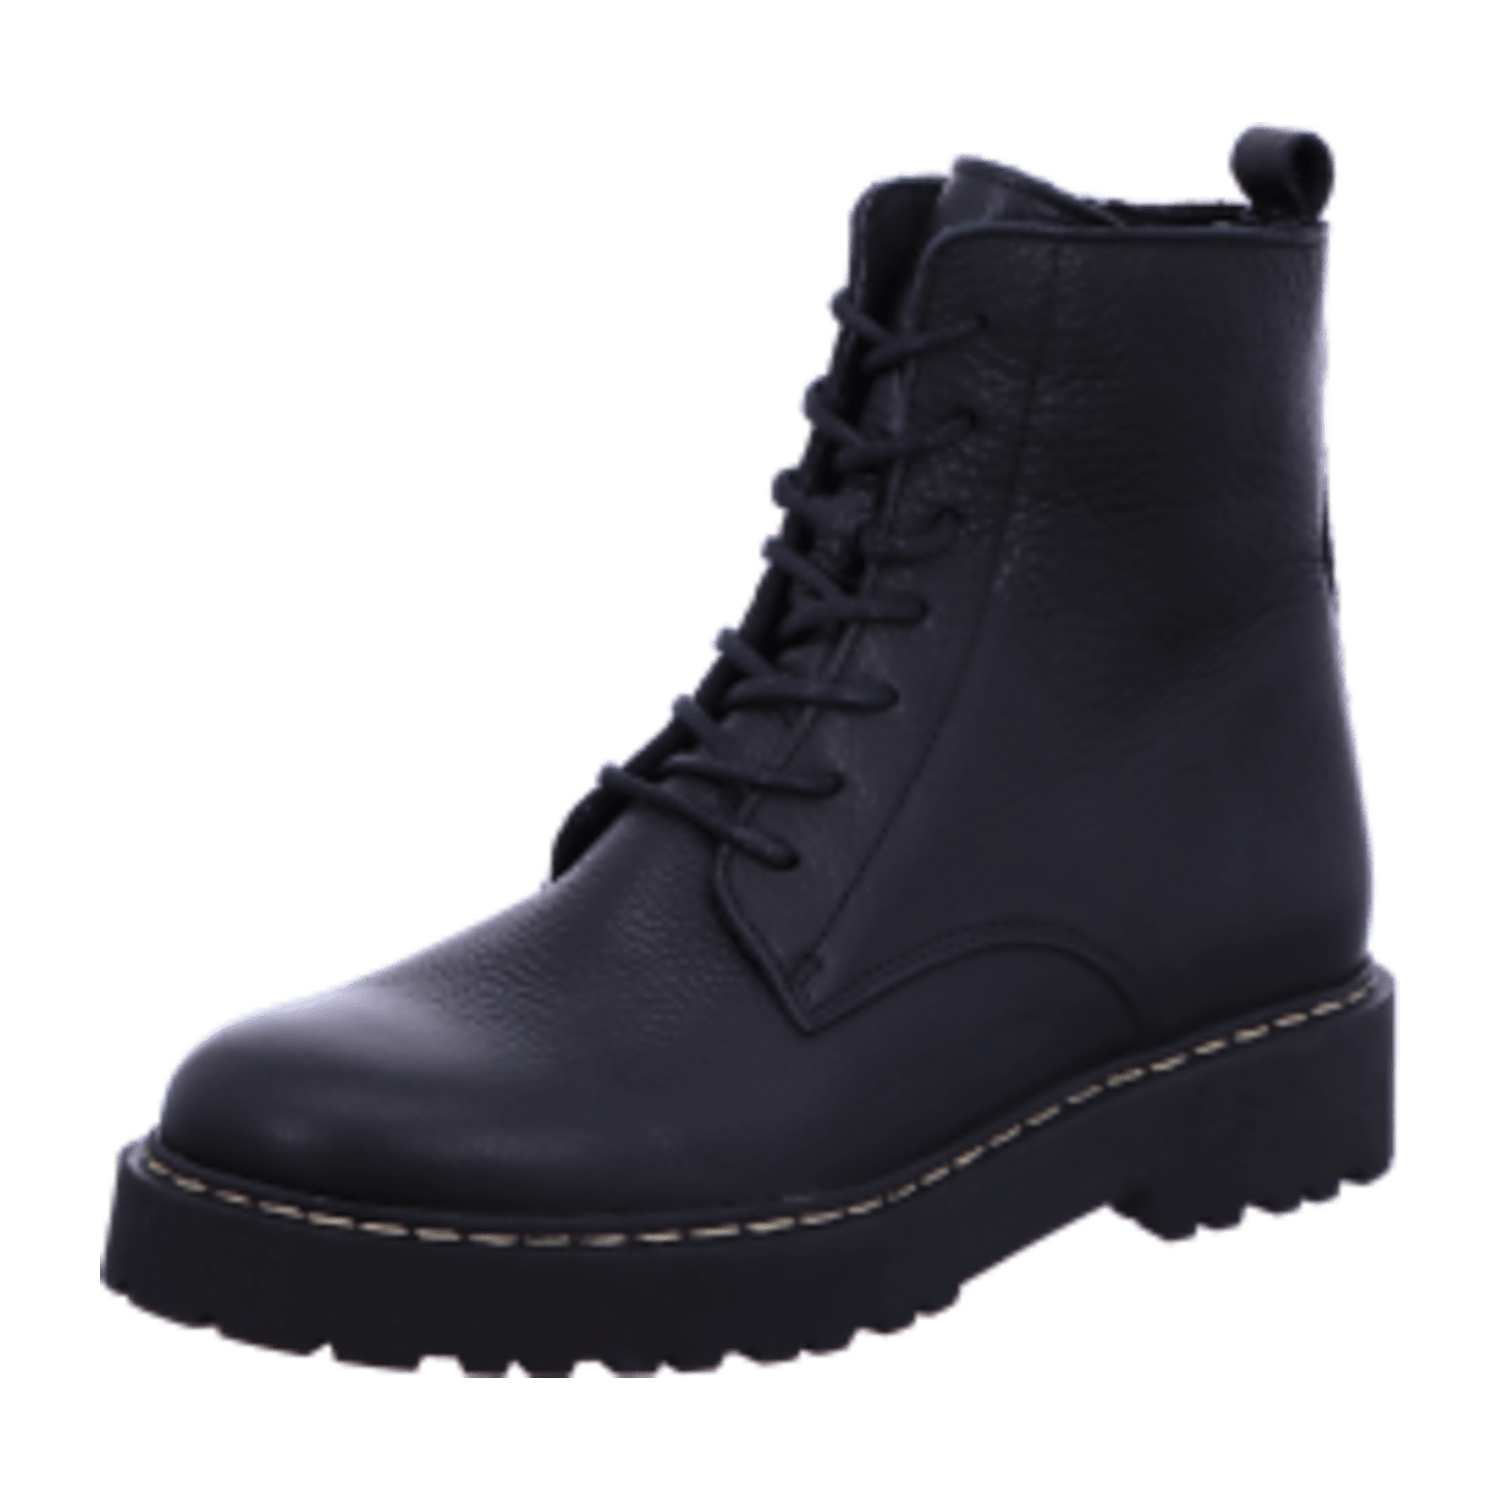 Online Shoes F8280-03sauvage militar black